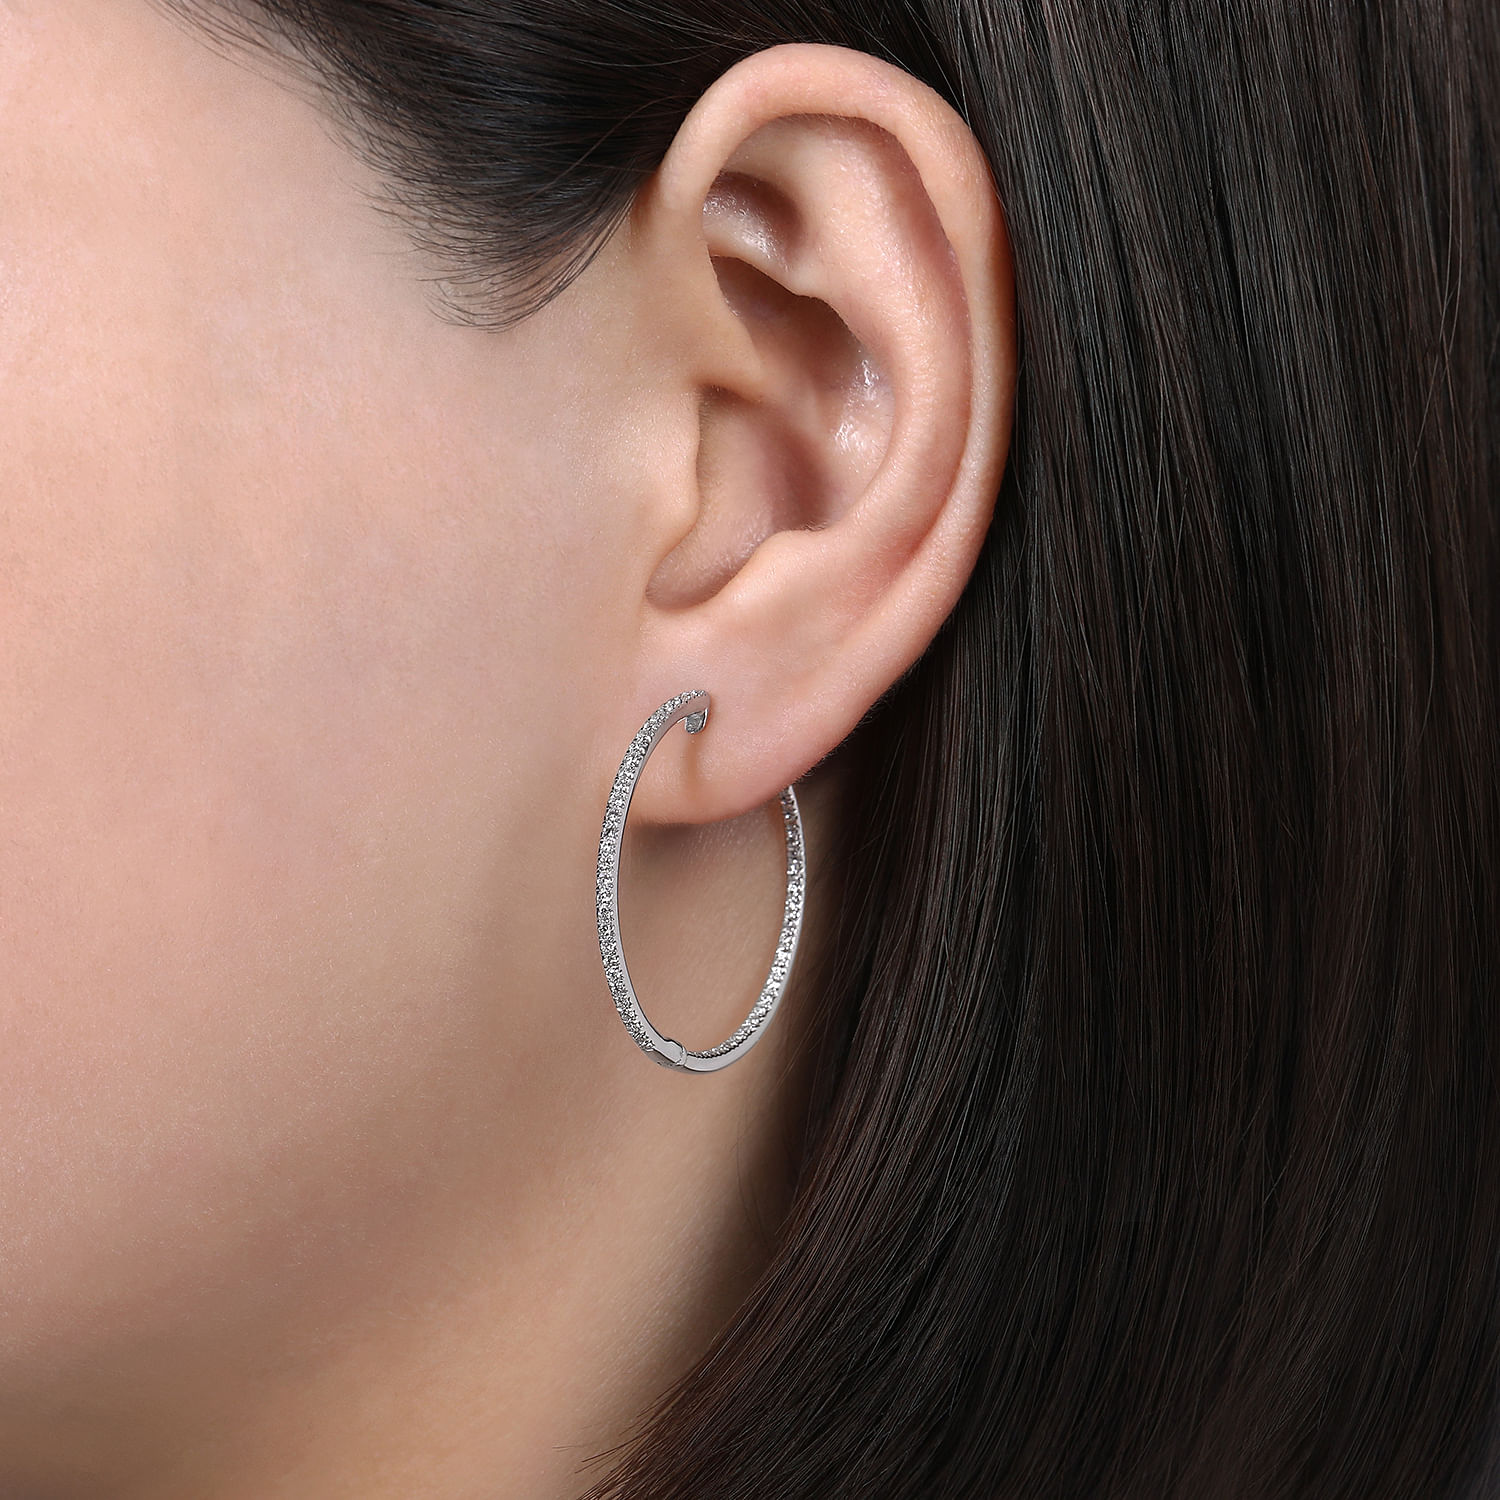 14K White Gold 30mm Round Inside Out Diamond Hoop Earrings